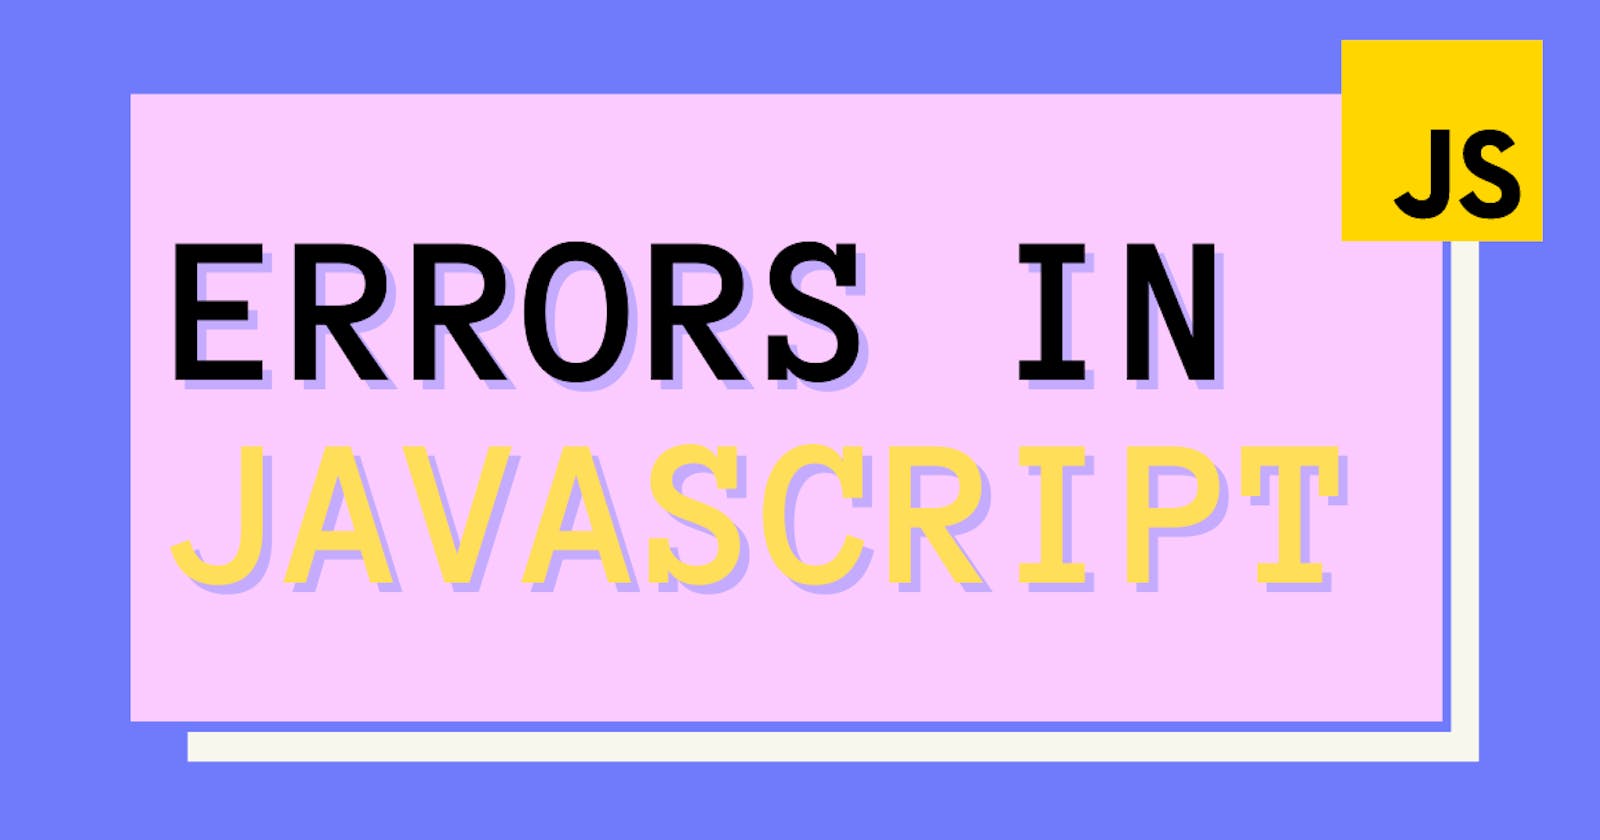 Different types of Error in JavaScript